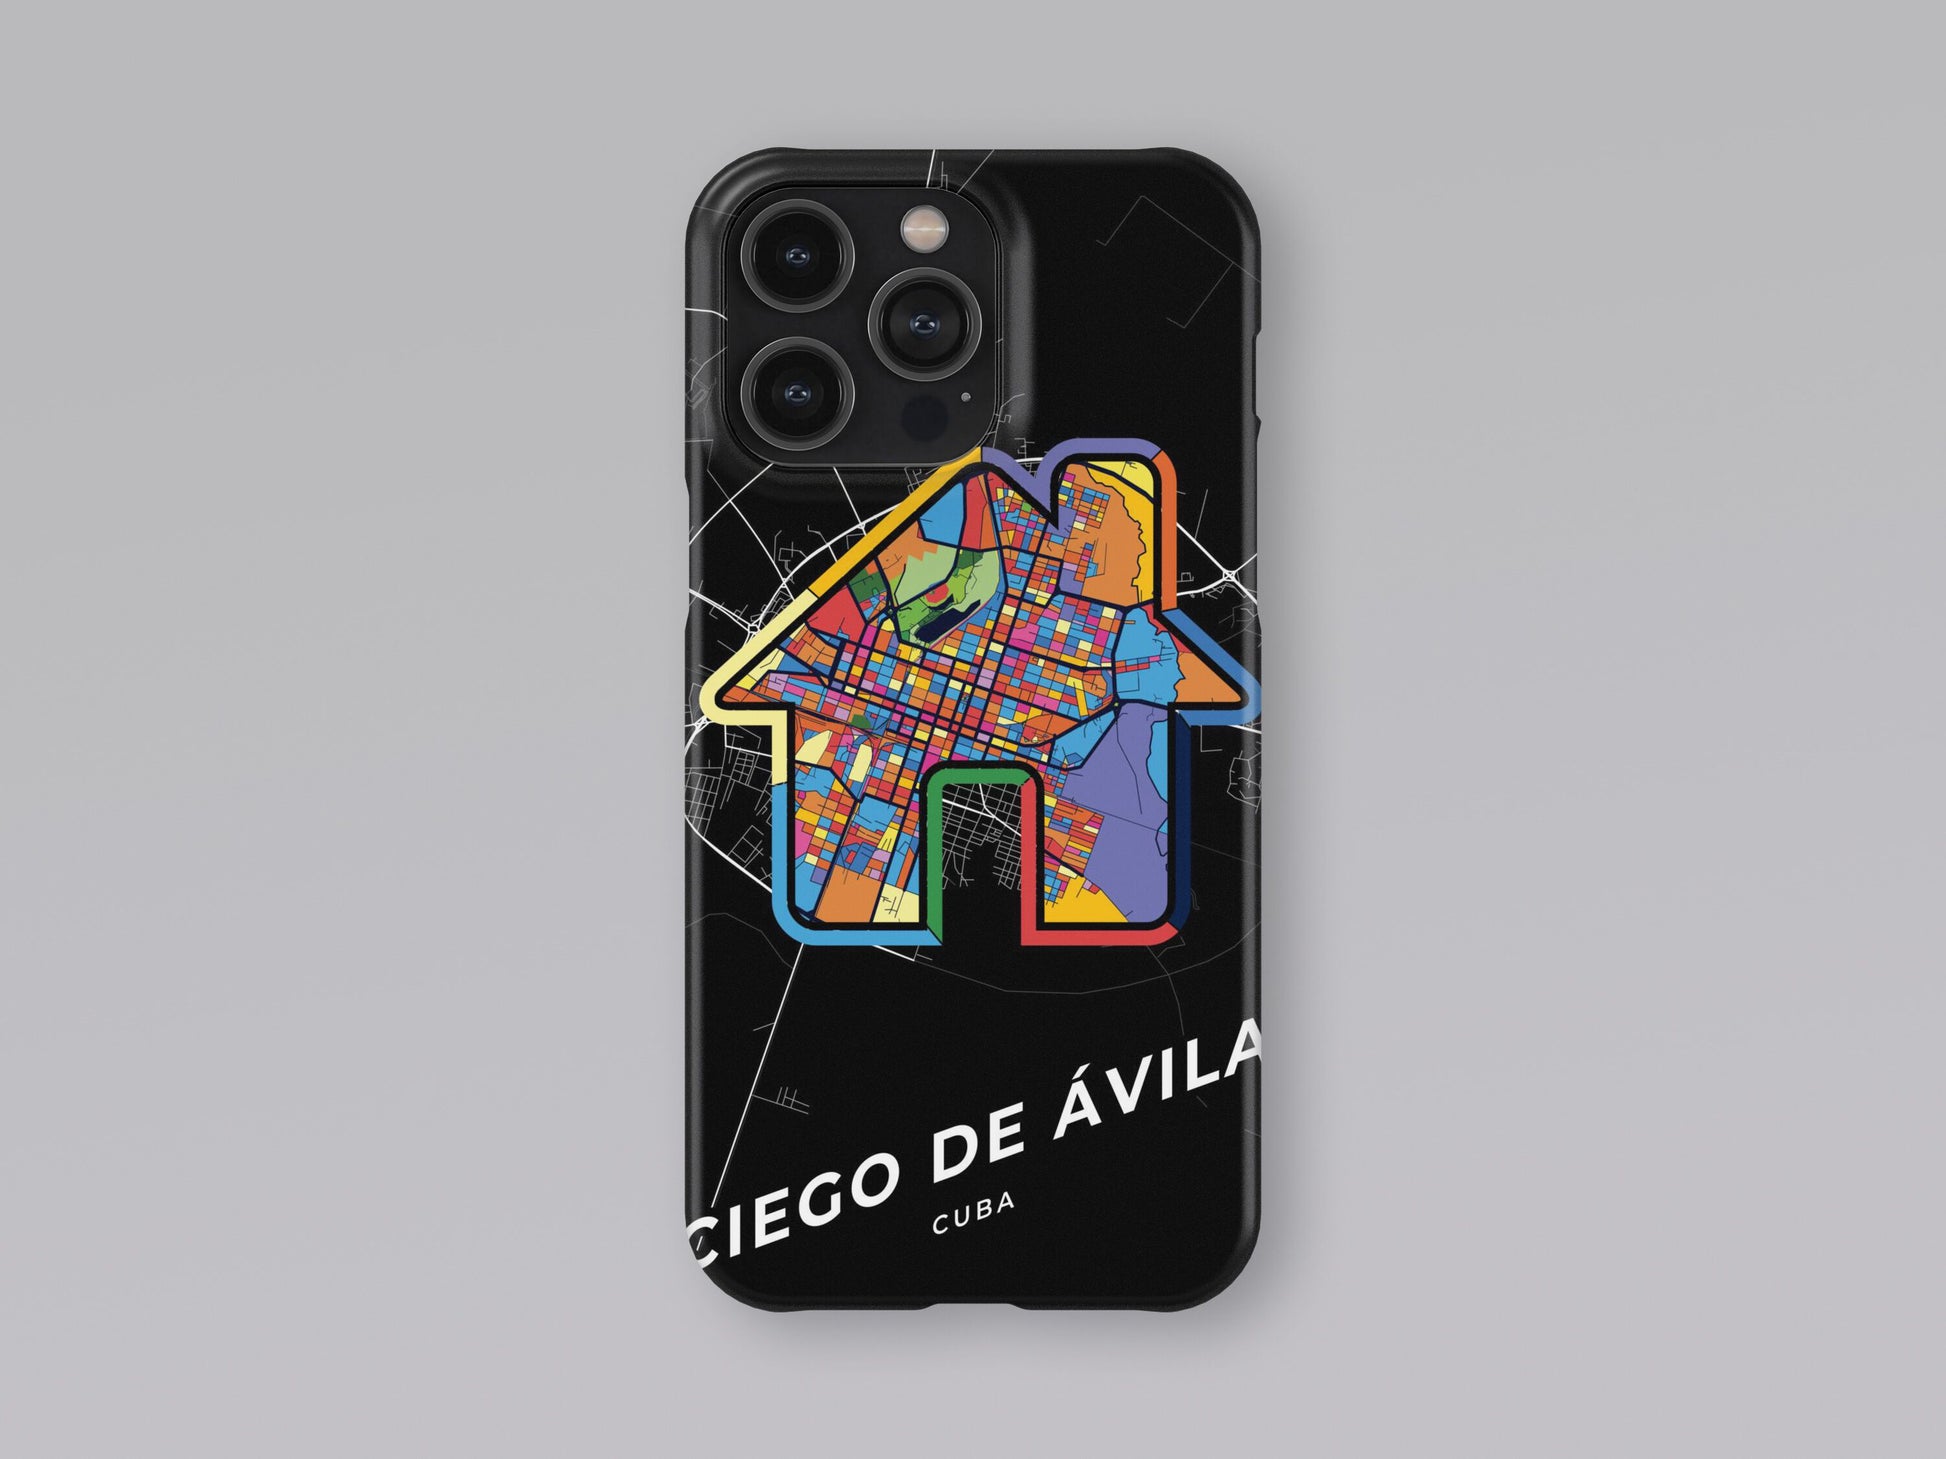 Ciego De Ávila Cuba slim phone case with colorful icon. Birthday, wedding or housewarming gift. Couple match cases. 3